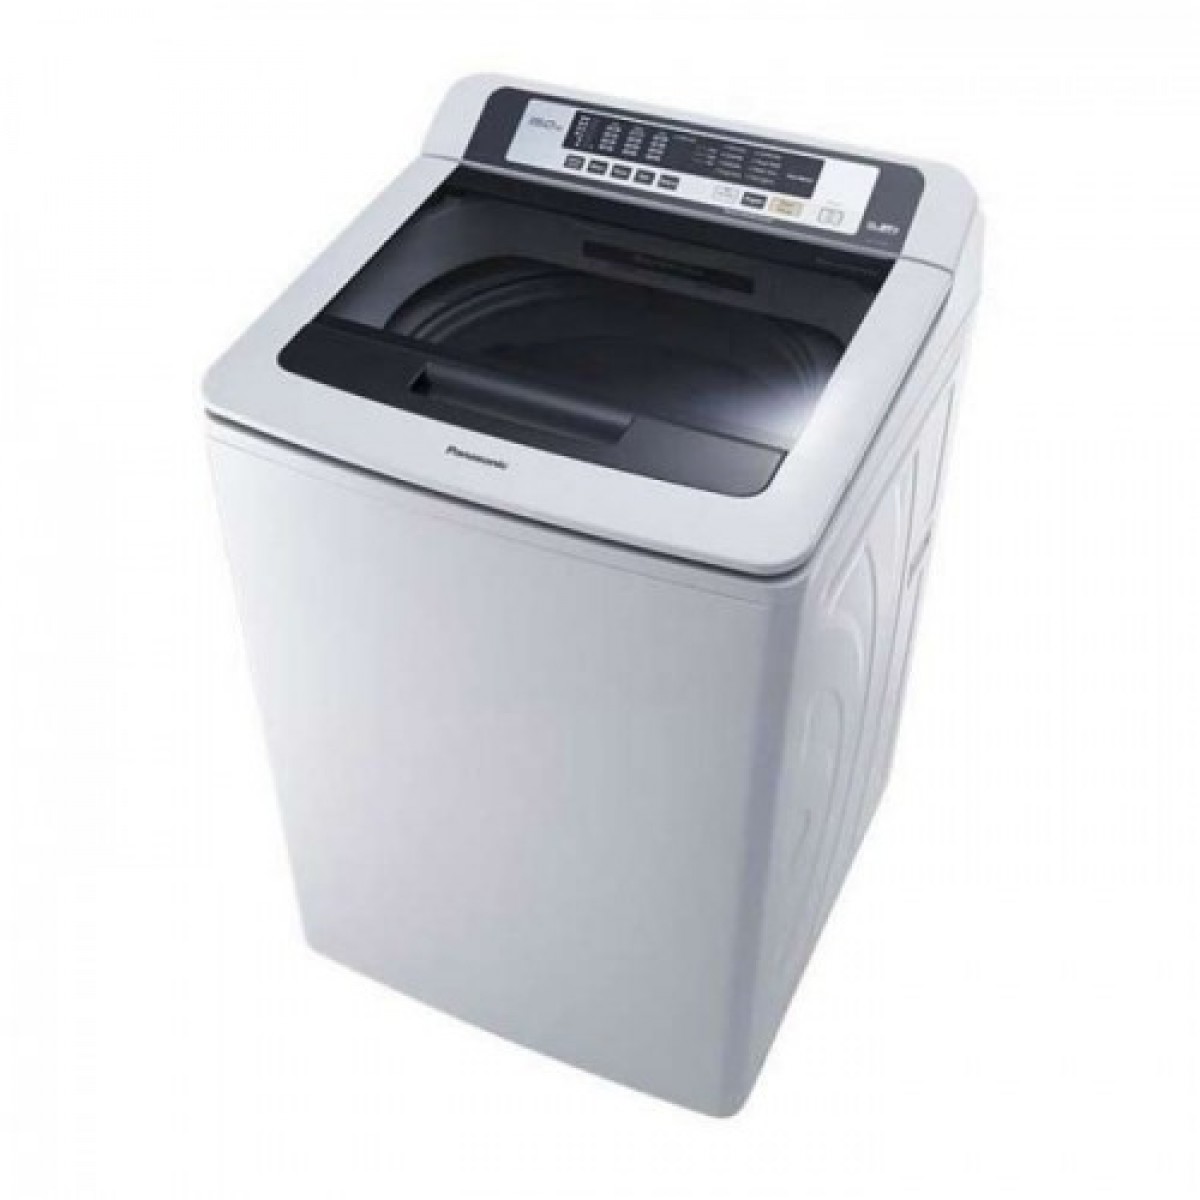 Panasonic NA-F70B5HRG 7 KG TopLoad Washing Machine